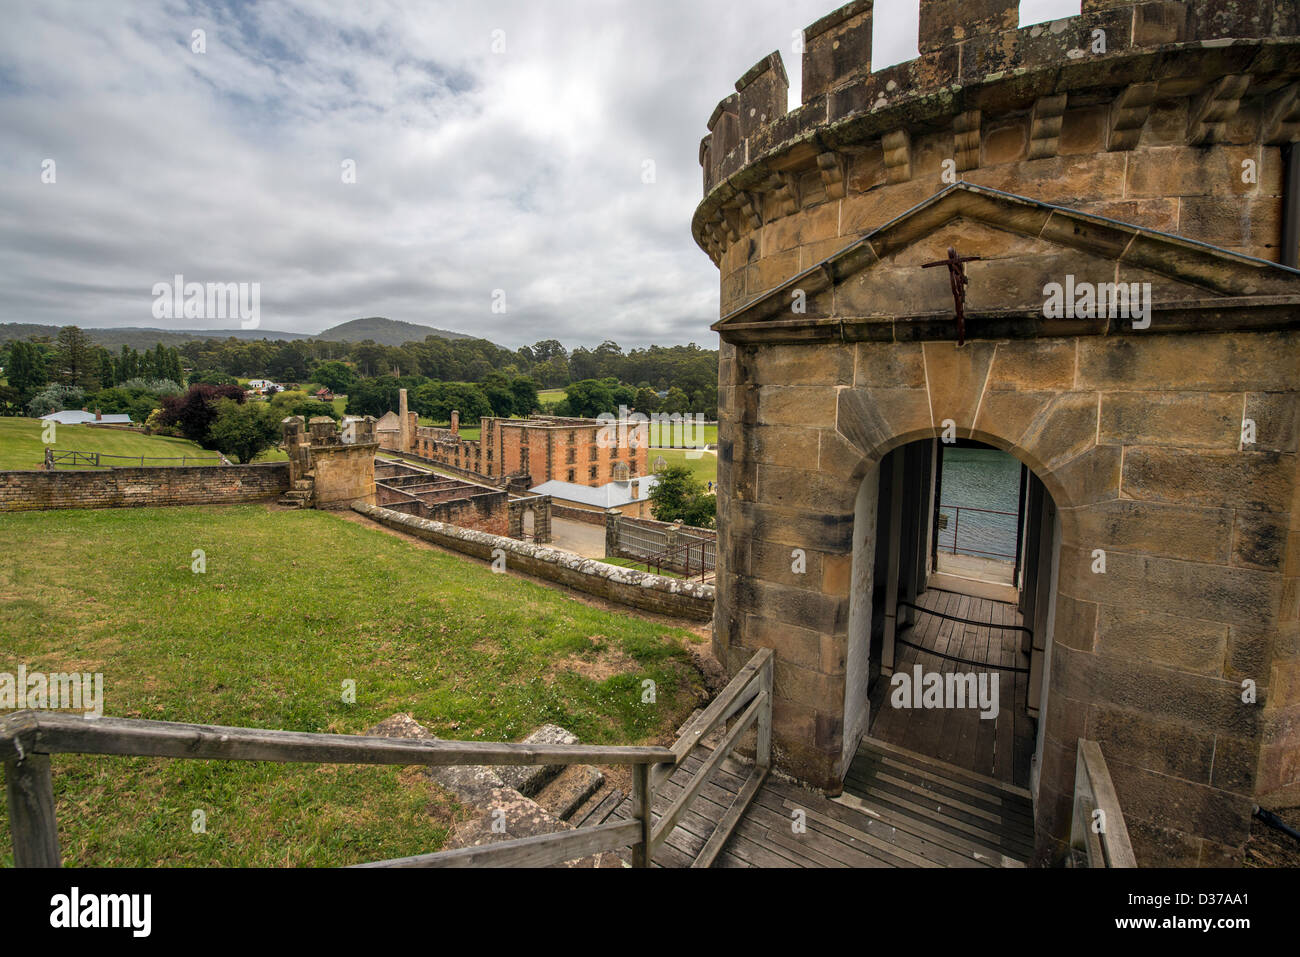 A lookout tower at Australia's historic Port Arthur heritage ruins in Tasmania. Stock Photo